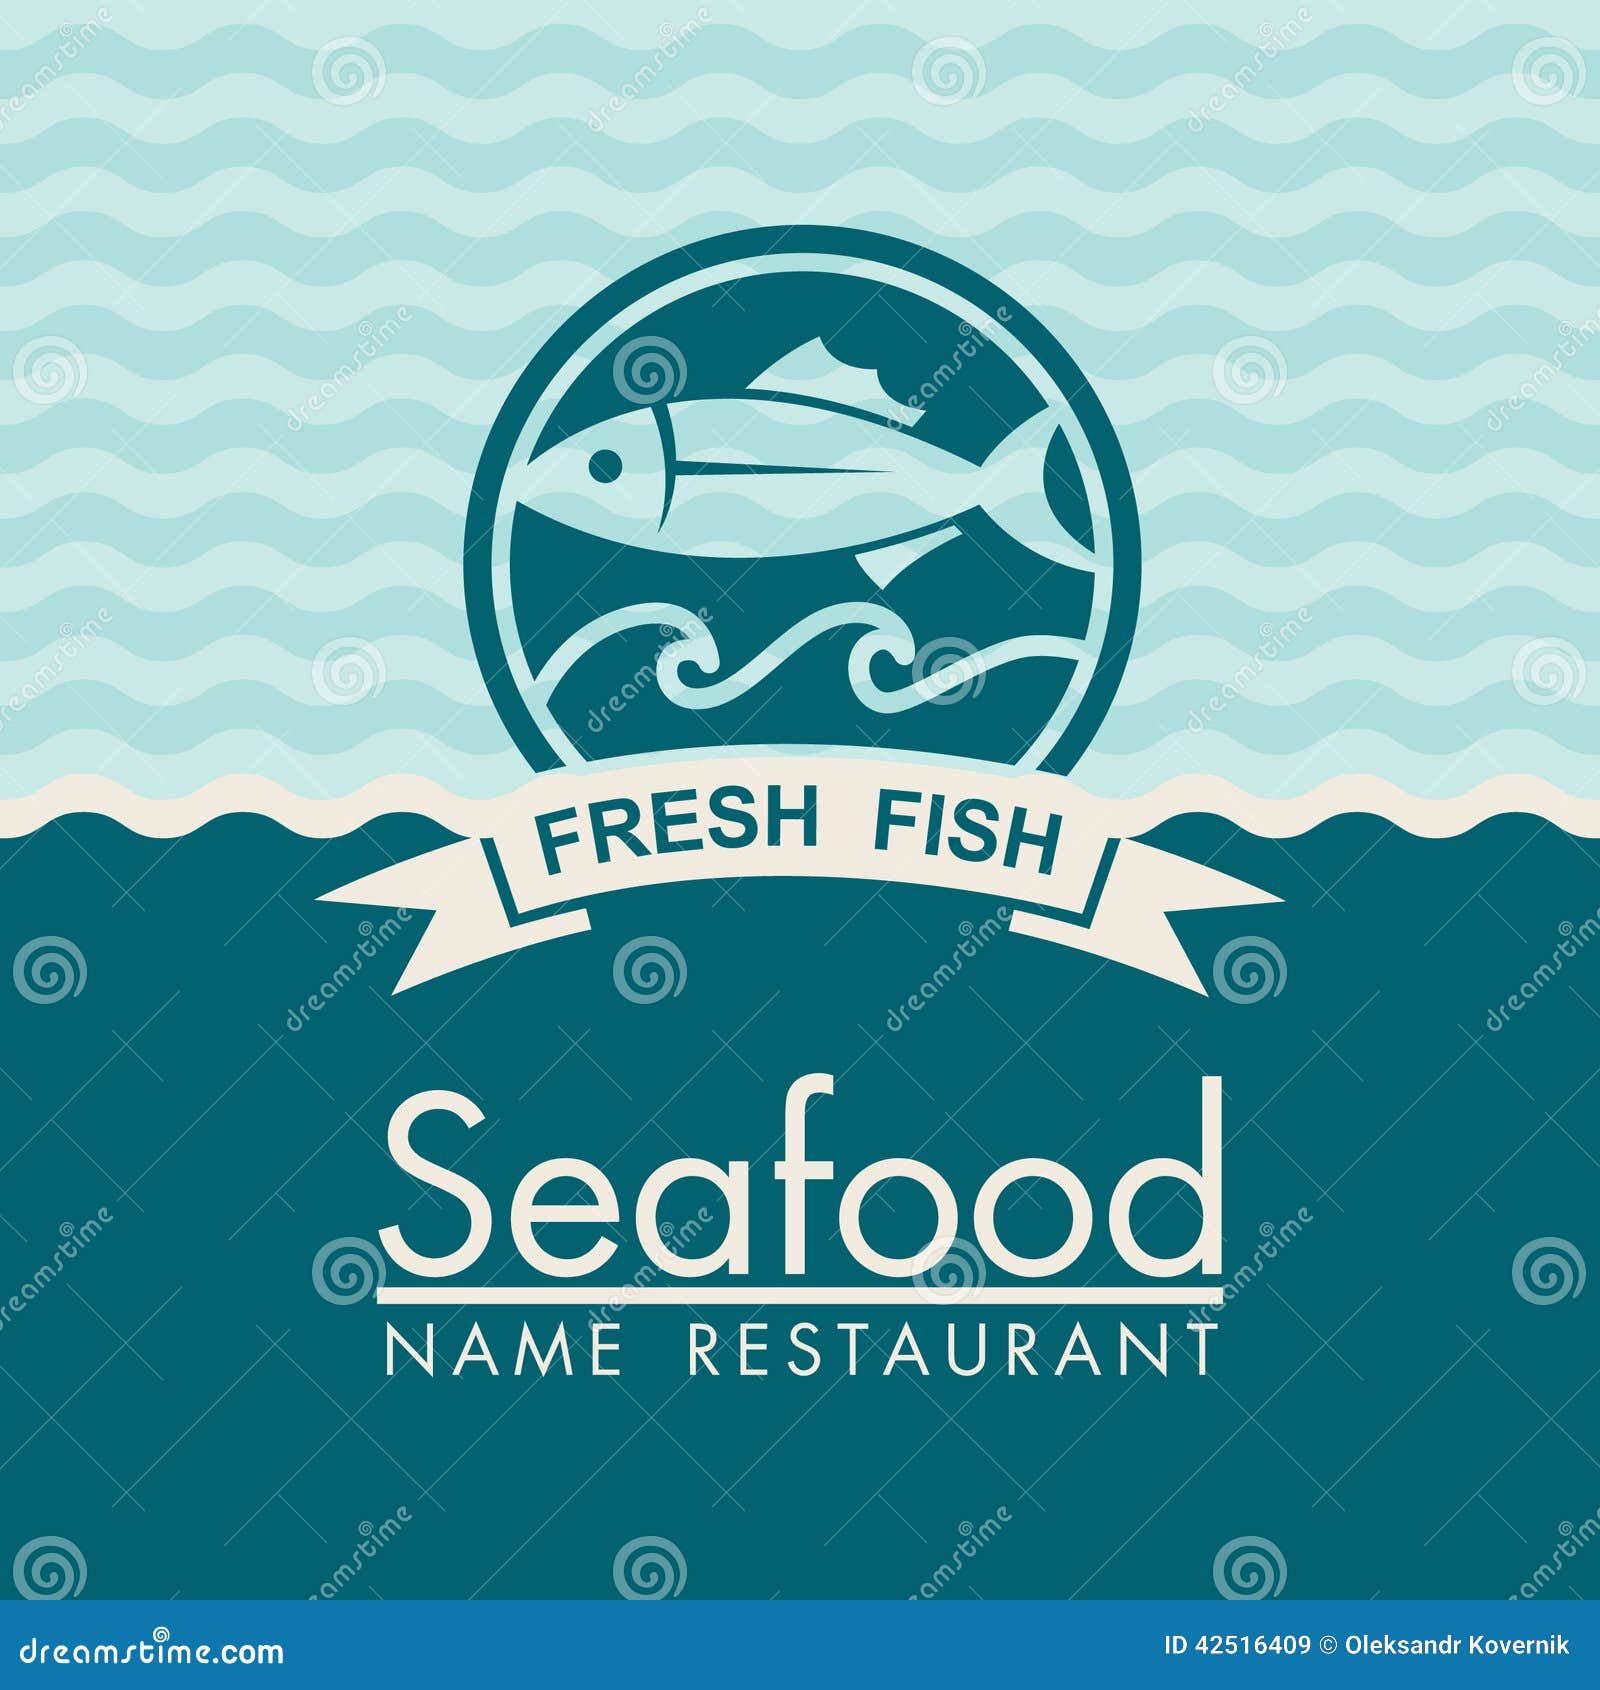 seafood menu 